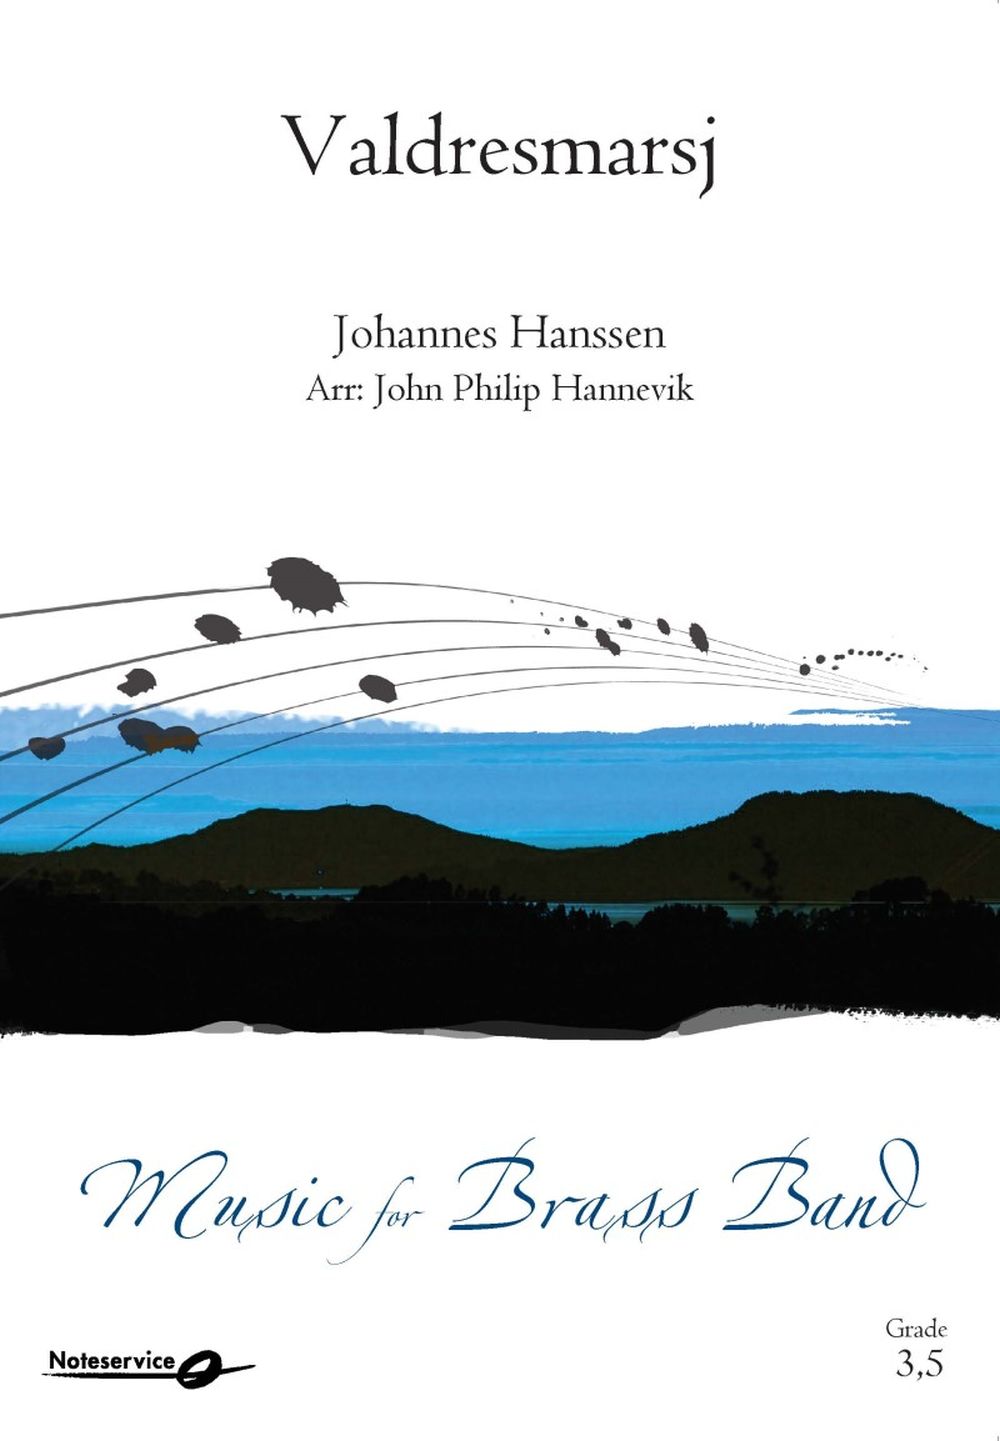 Johannes Hanssen: Valdresmarsj: Brass Band: Score and Parts